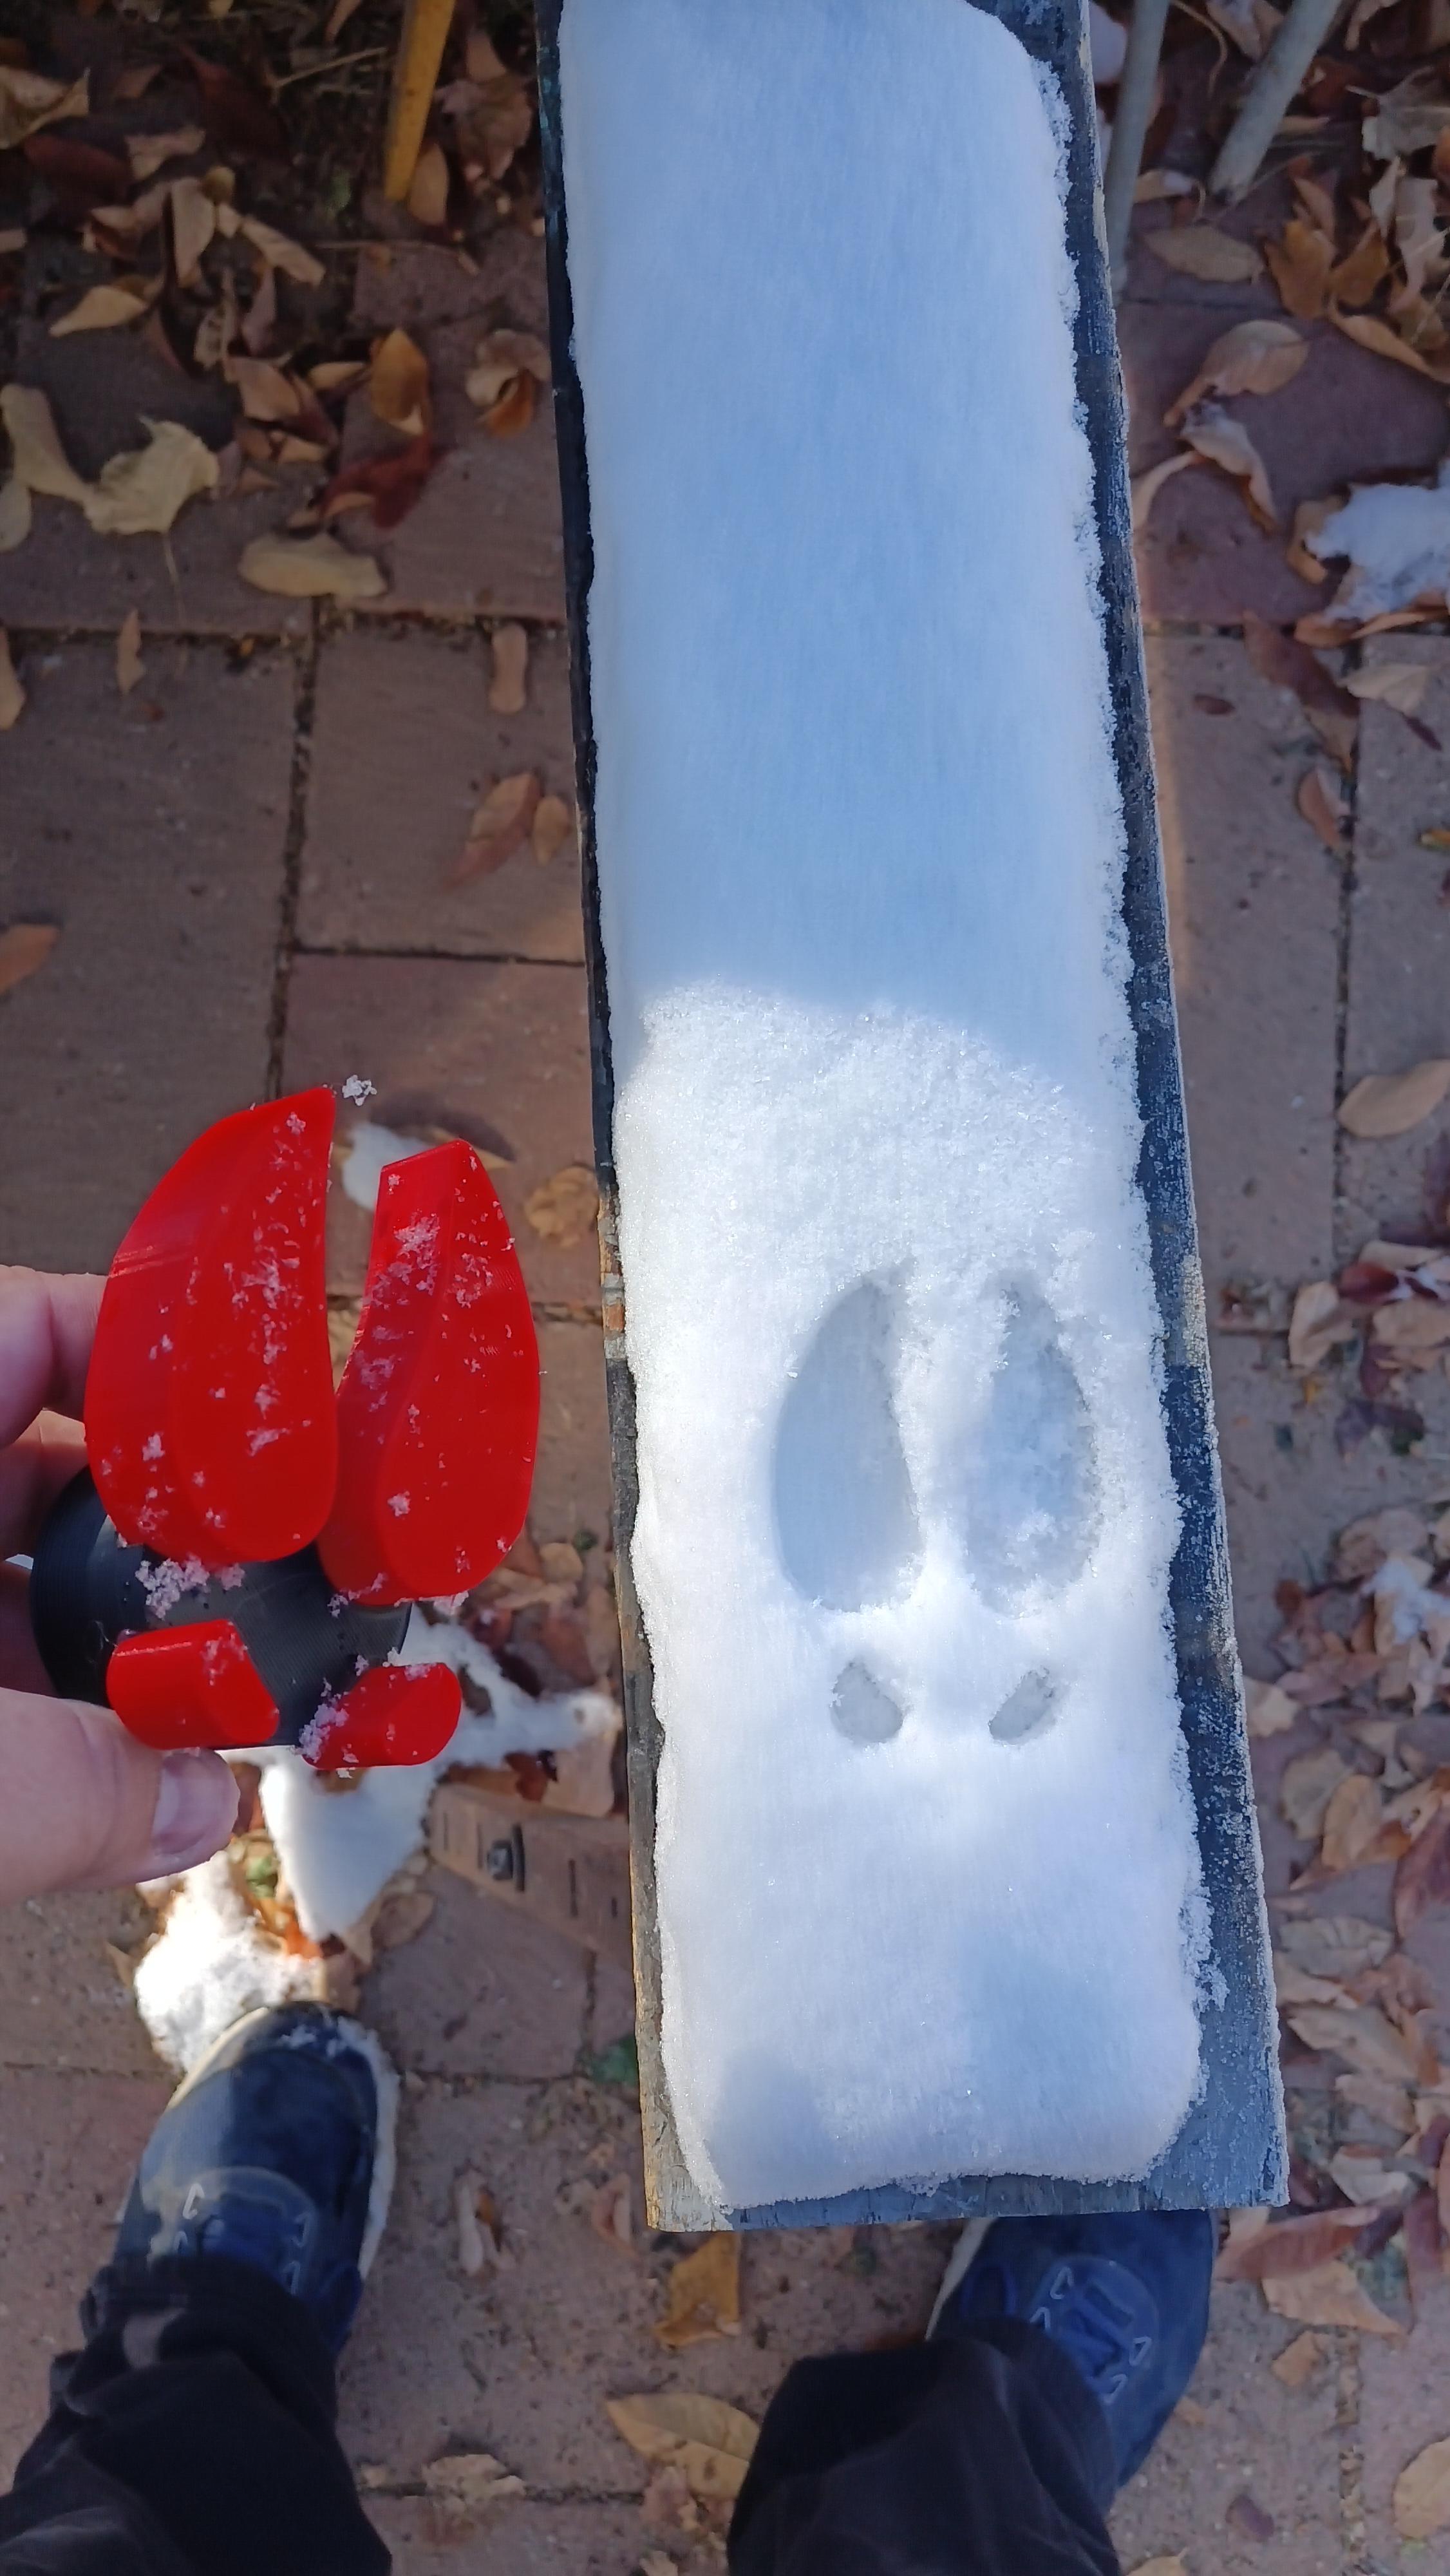 Reindeer Caribou hoof print to make tracks in Snow for Christmas 3d model